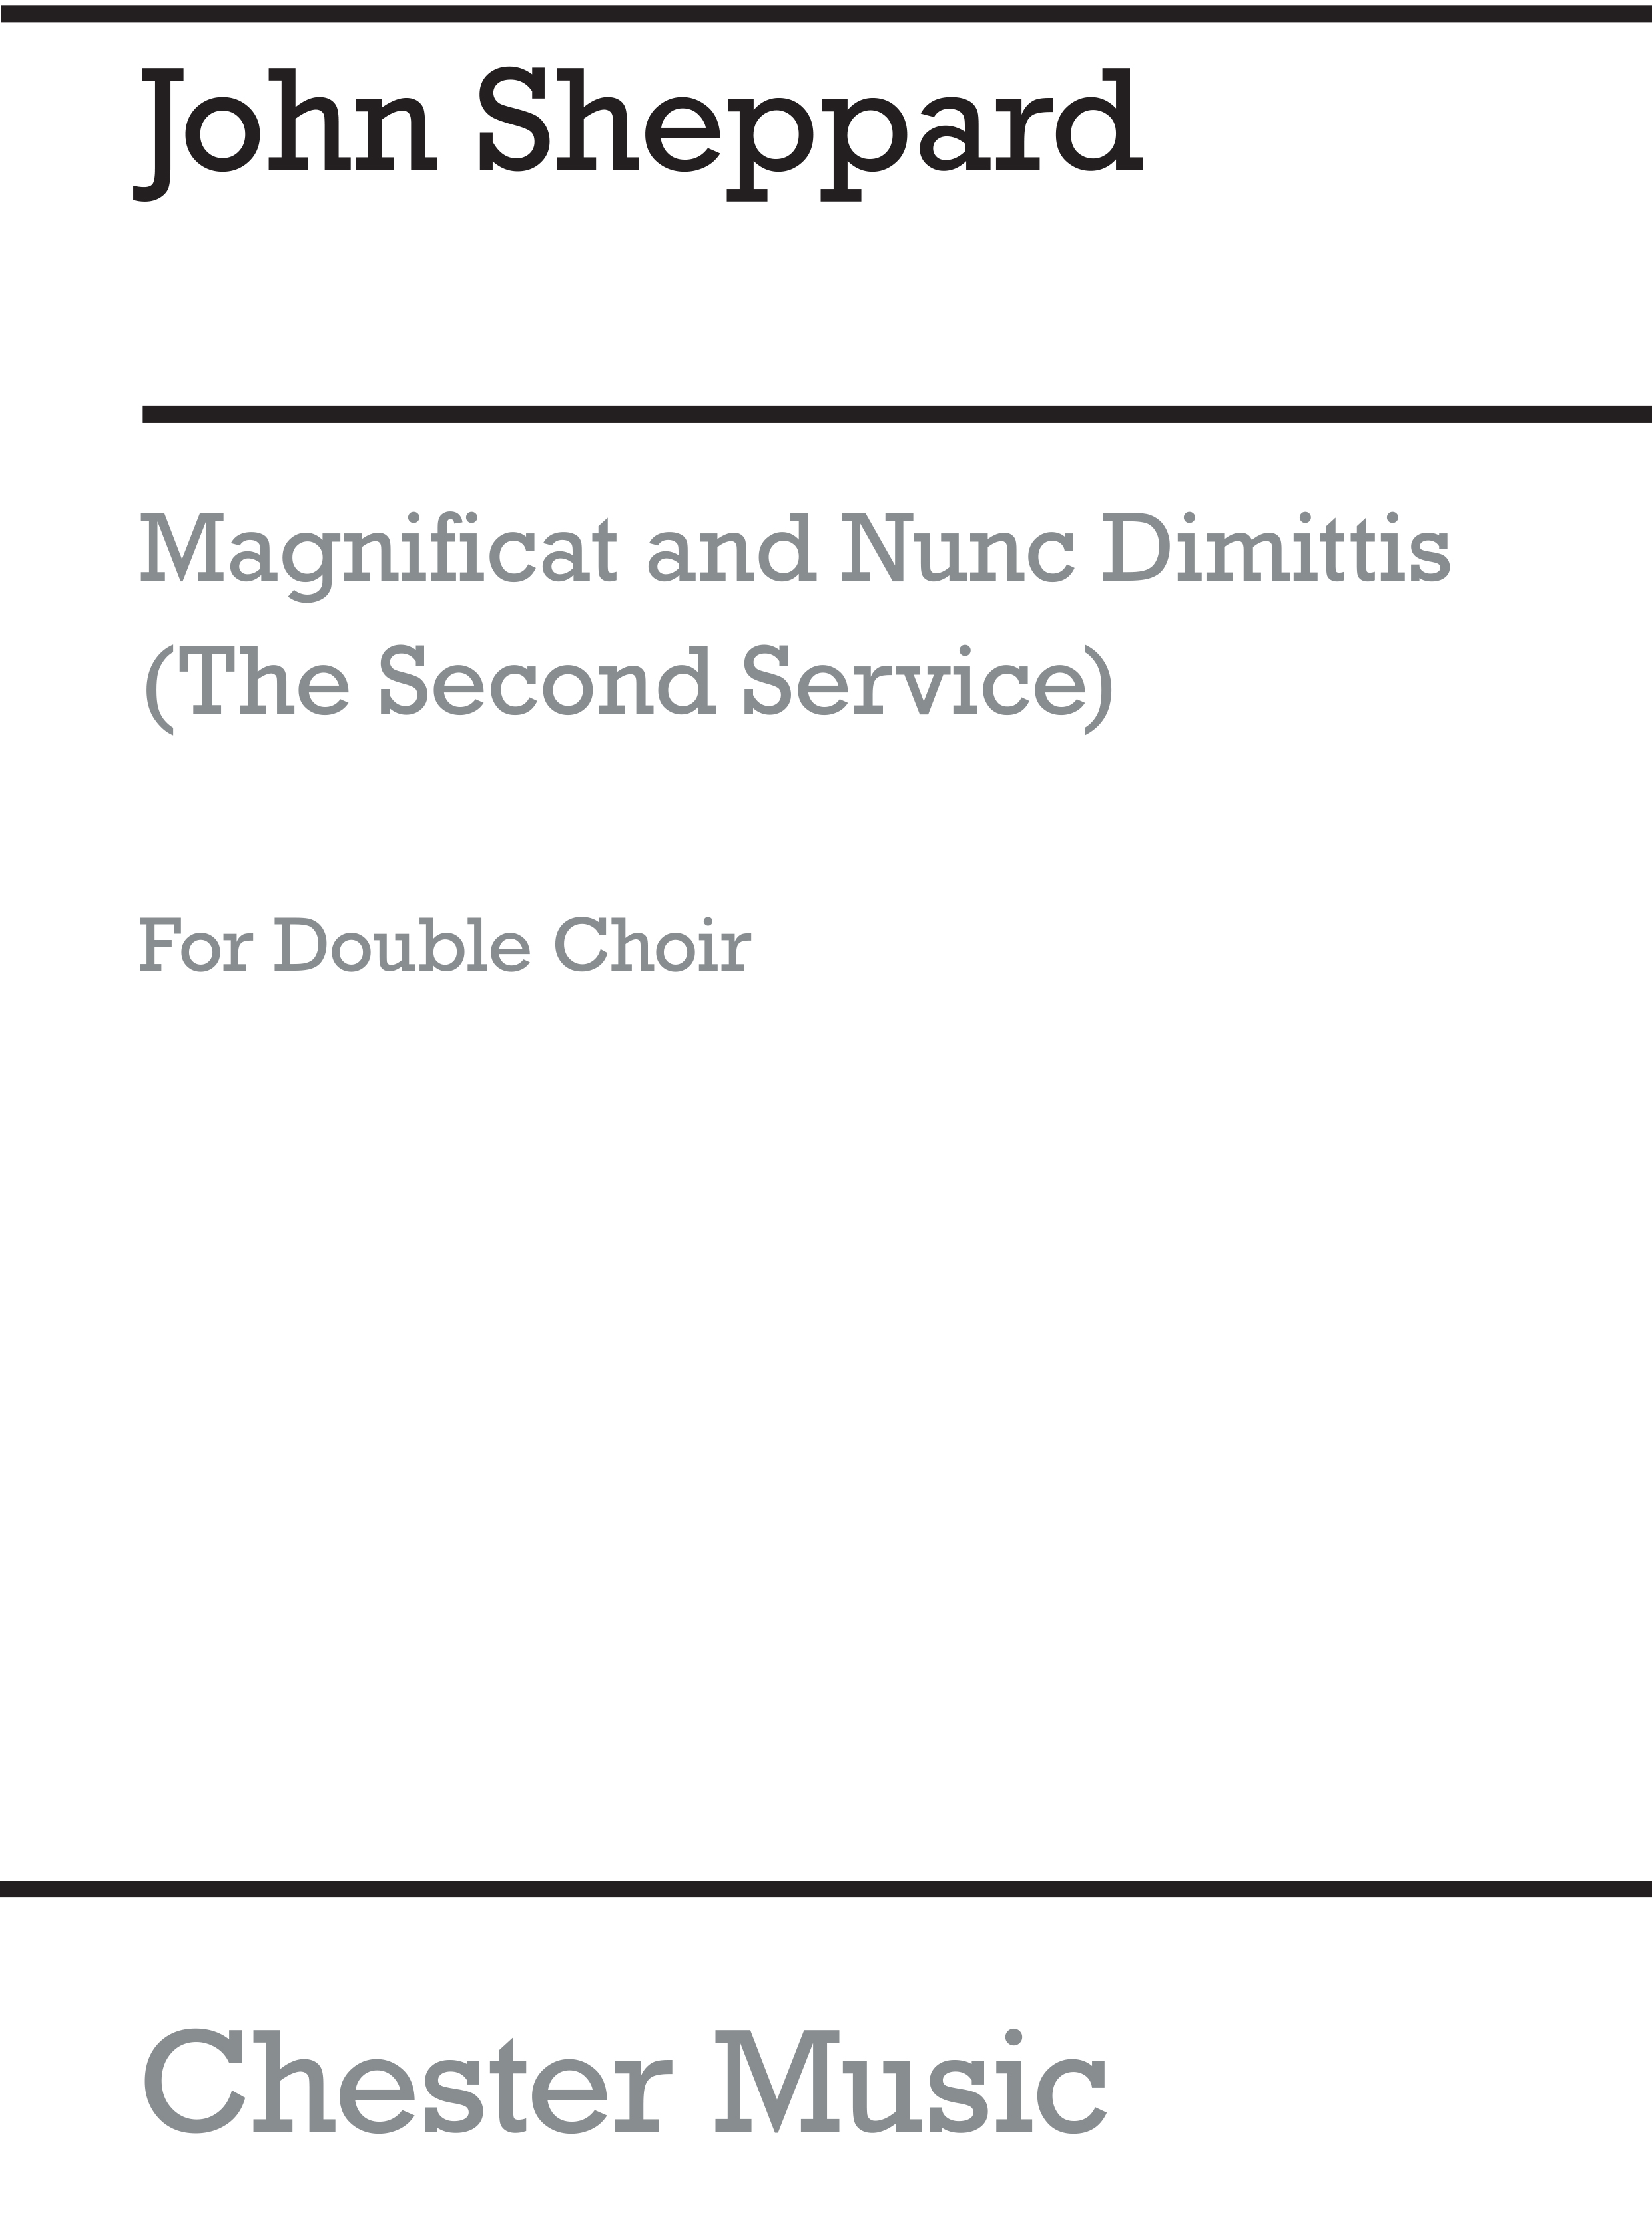 John Sheppard: Magnificat And Nunc Dimittis (2nd Service): SATB: Vocal Score